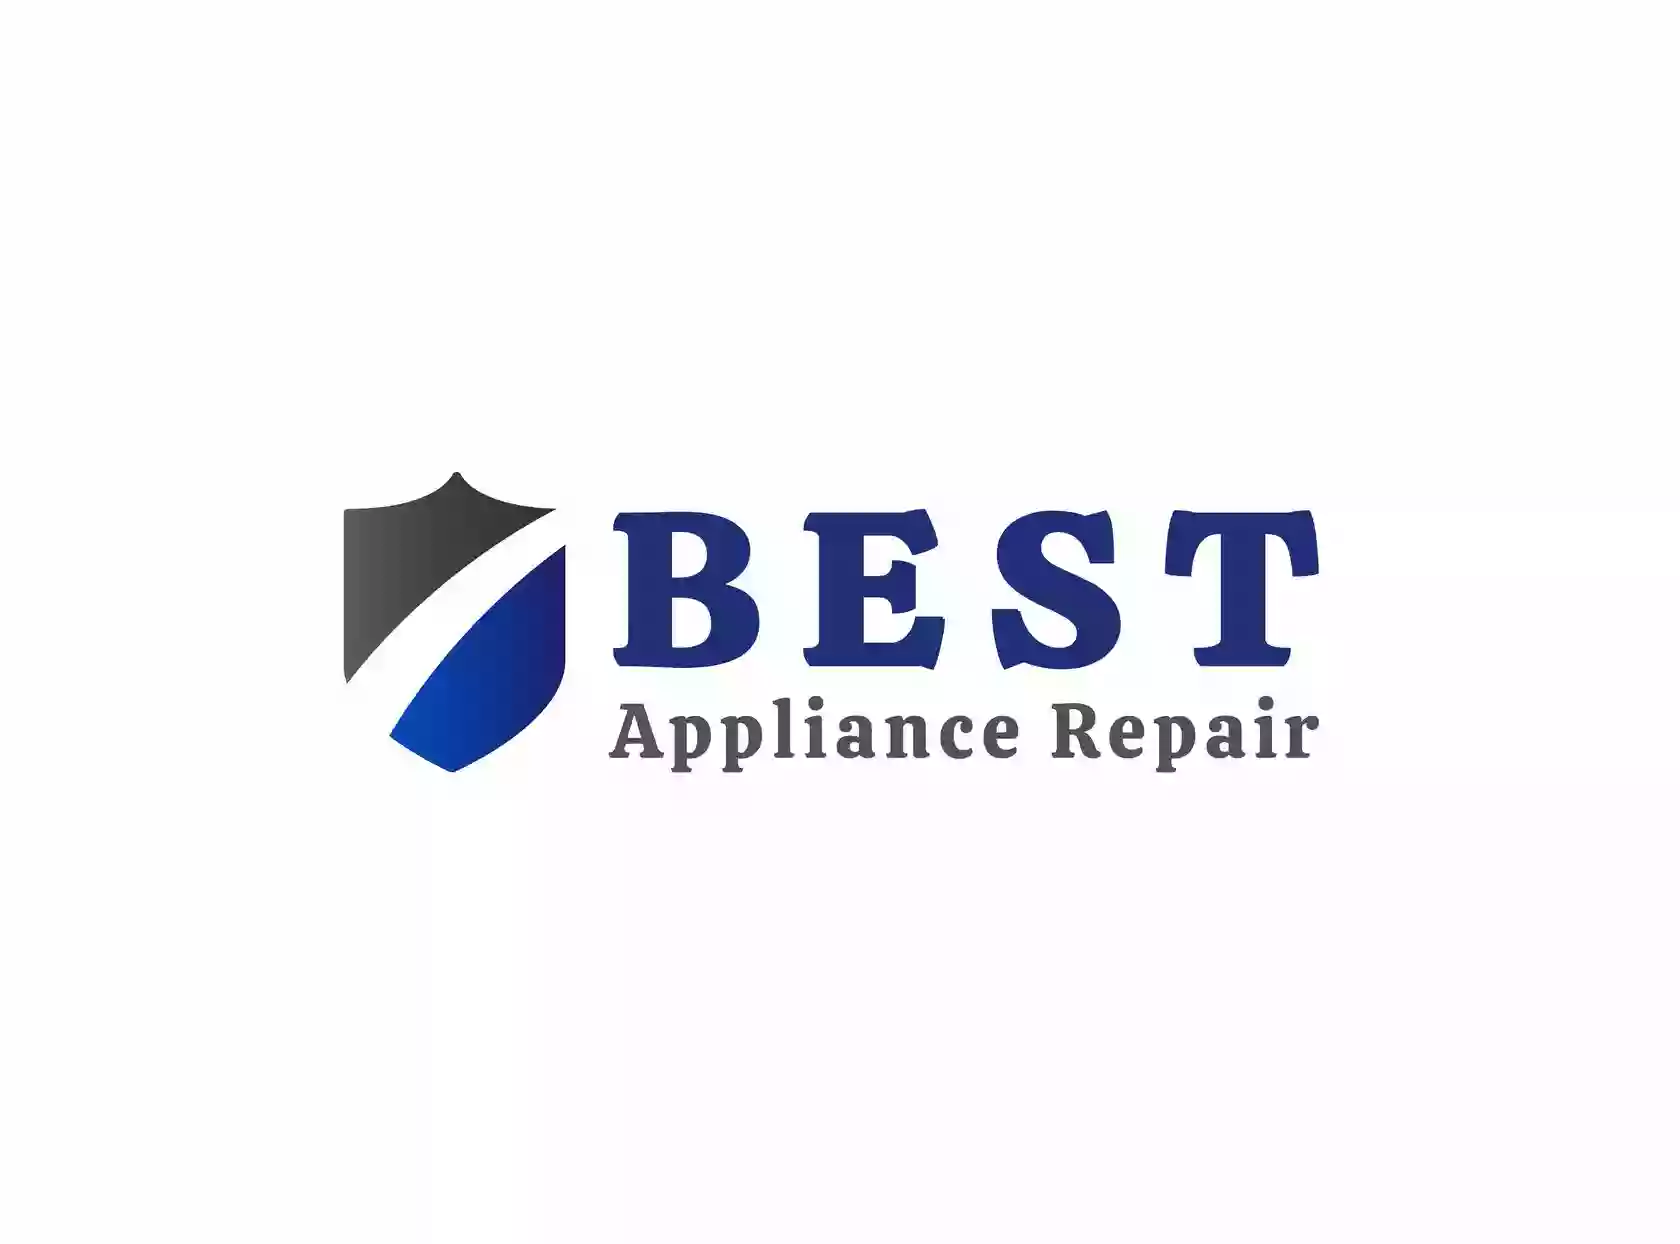 Best Appliance Repair